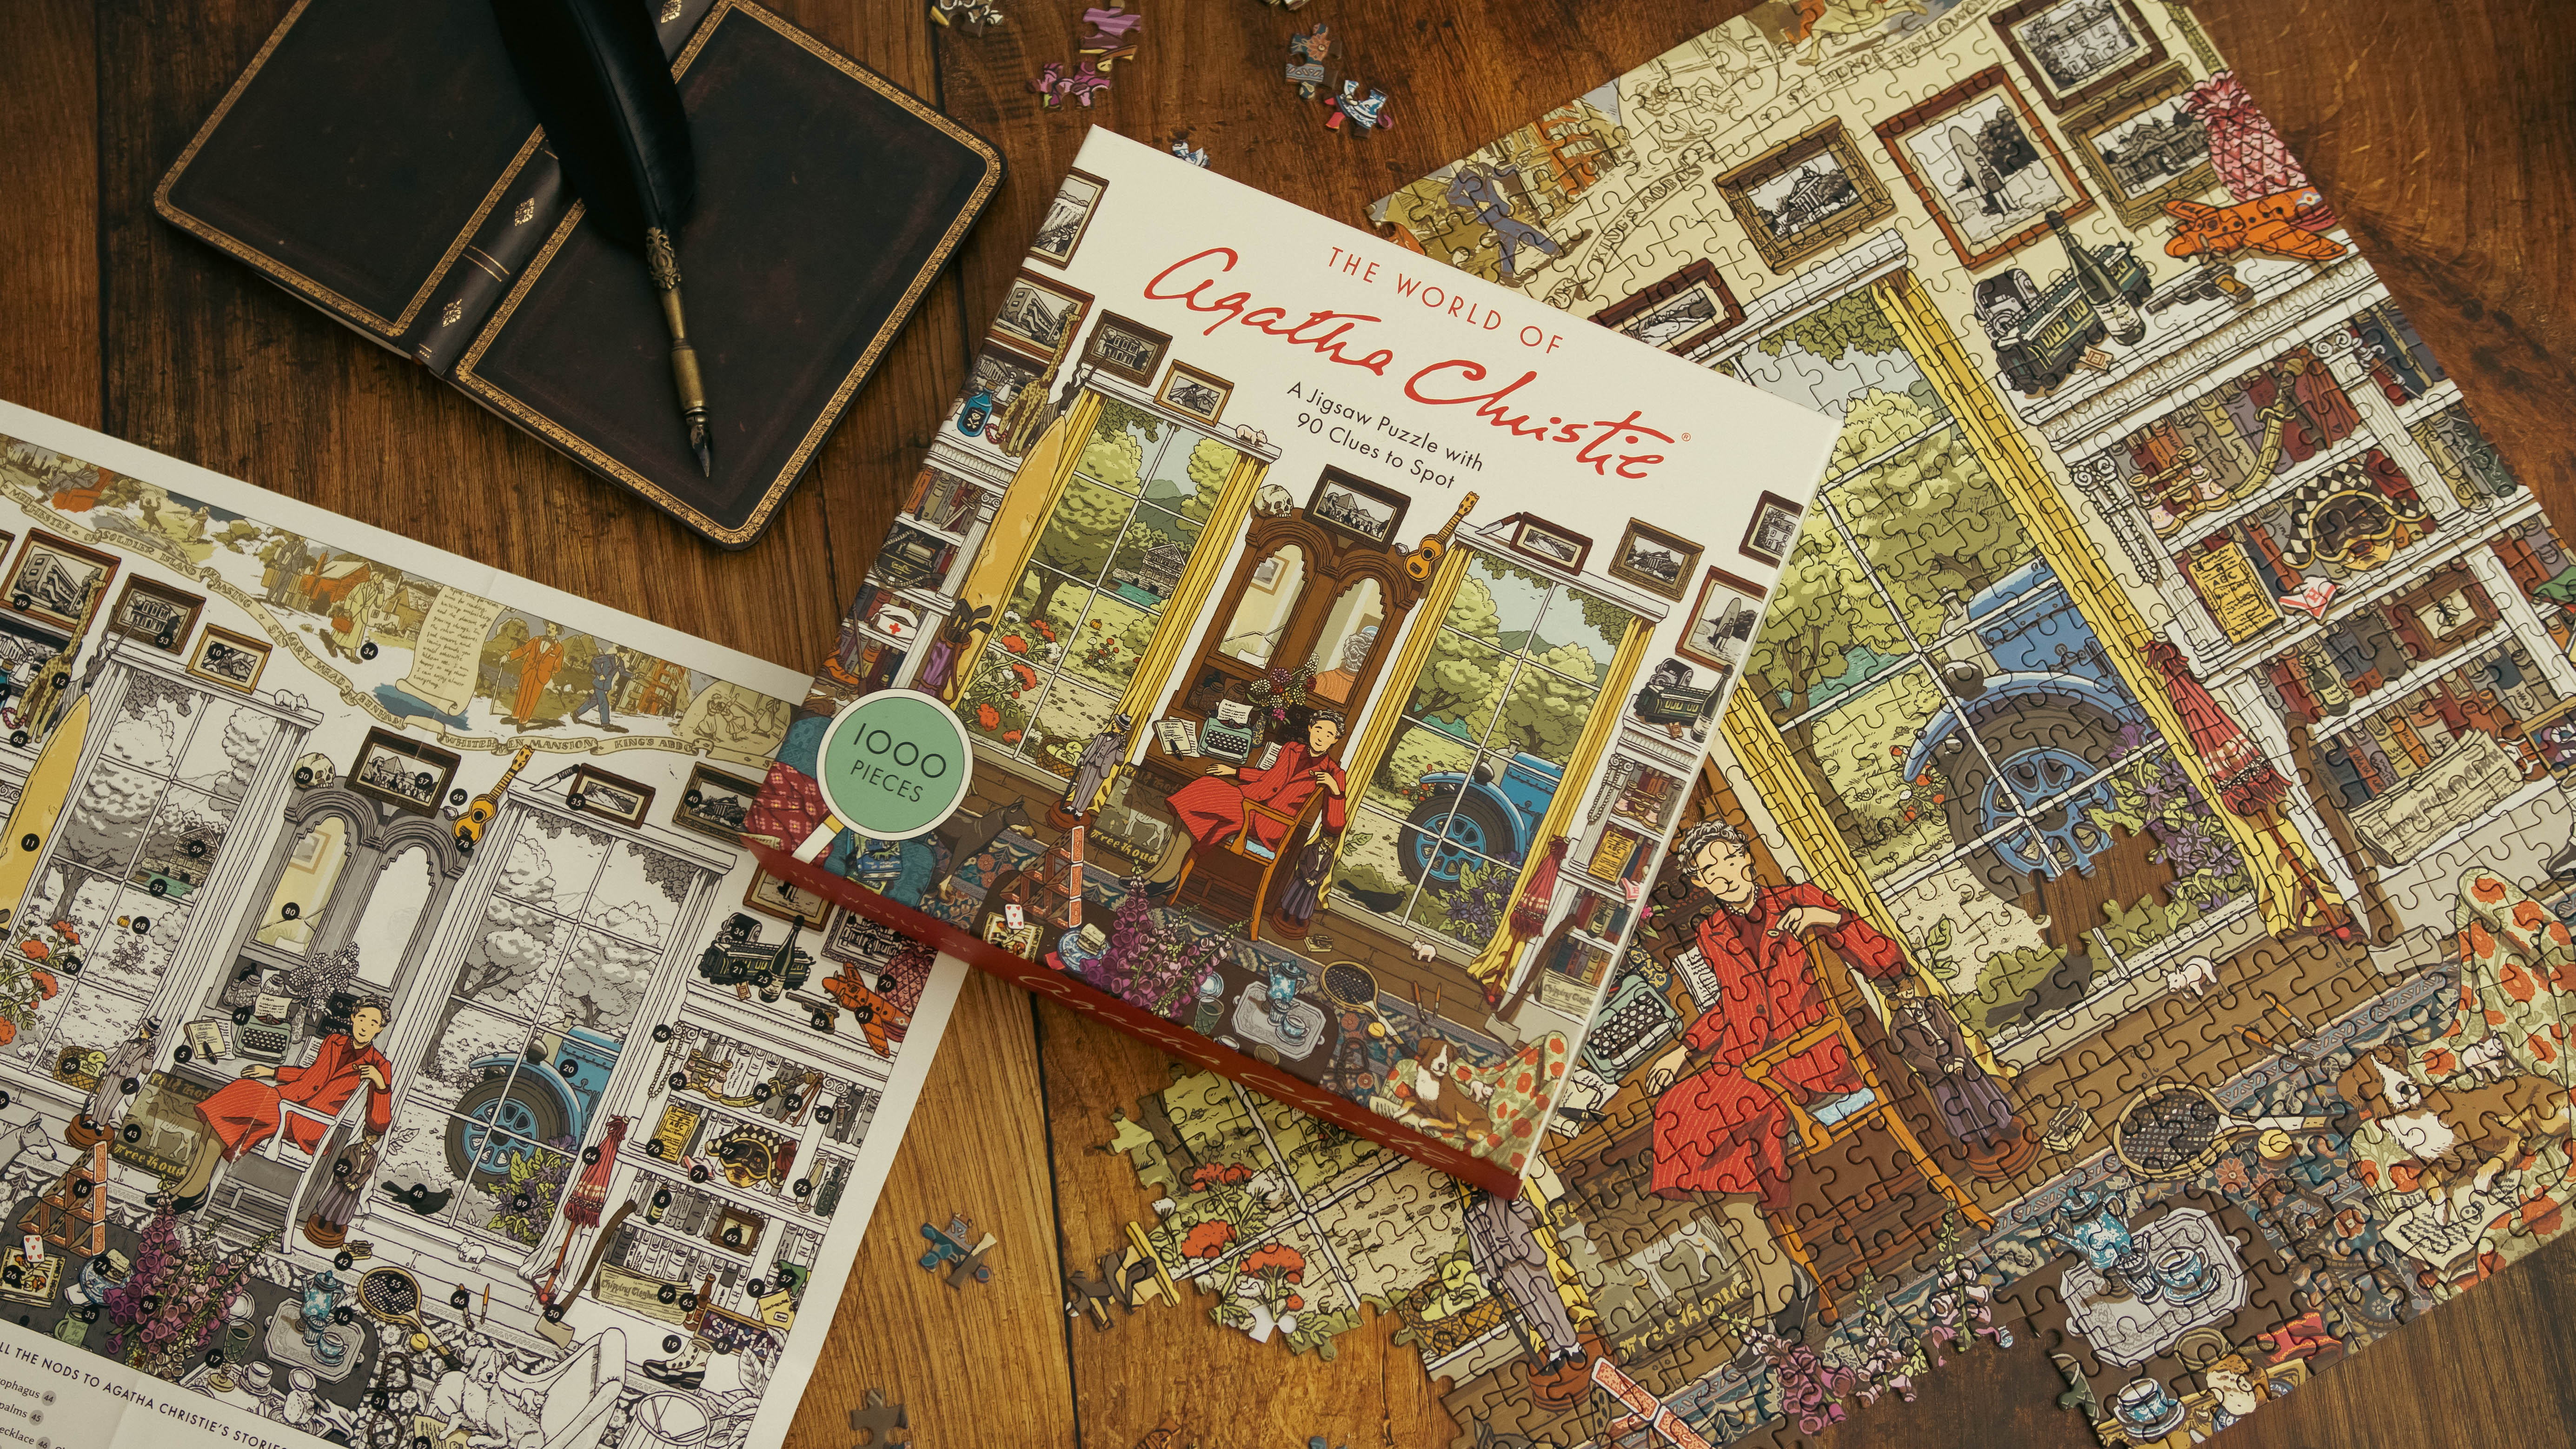 The World of Agatha Christie 1000-piece Jigsaw